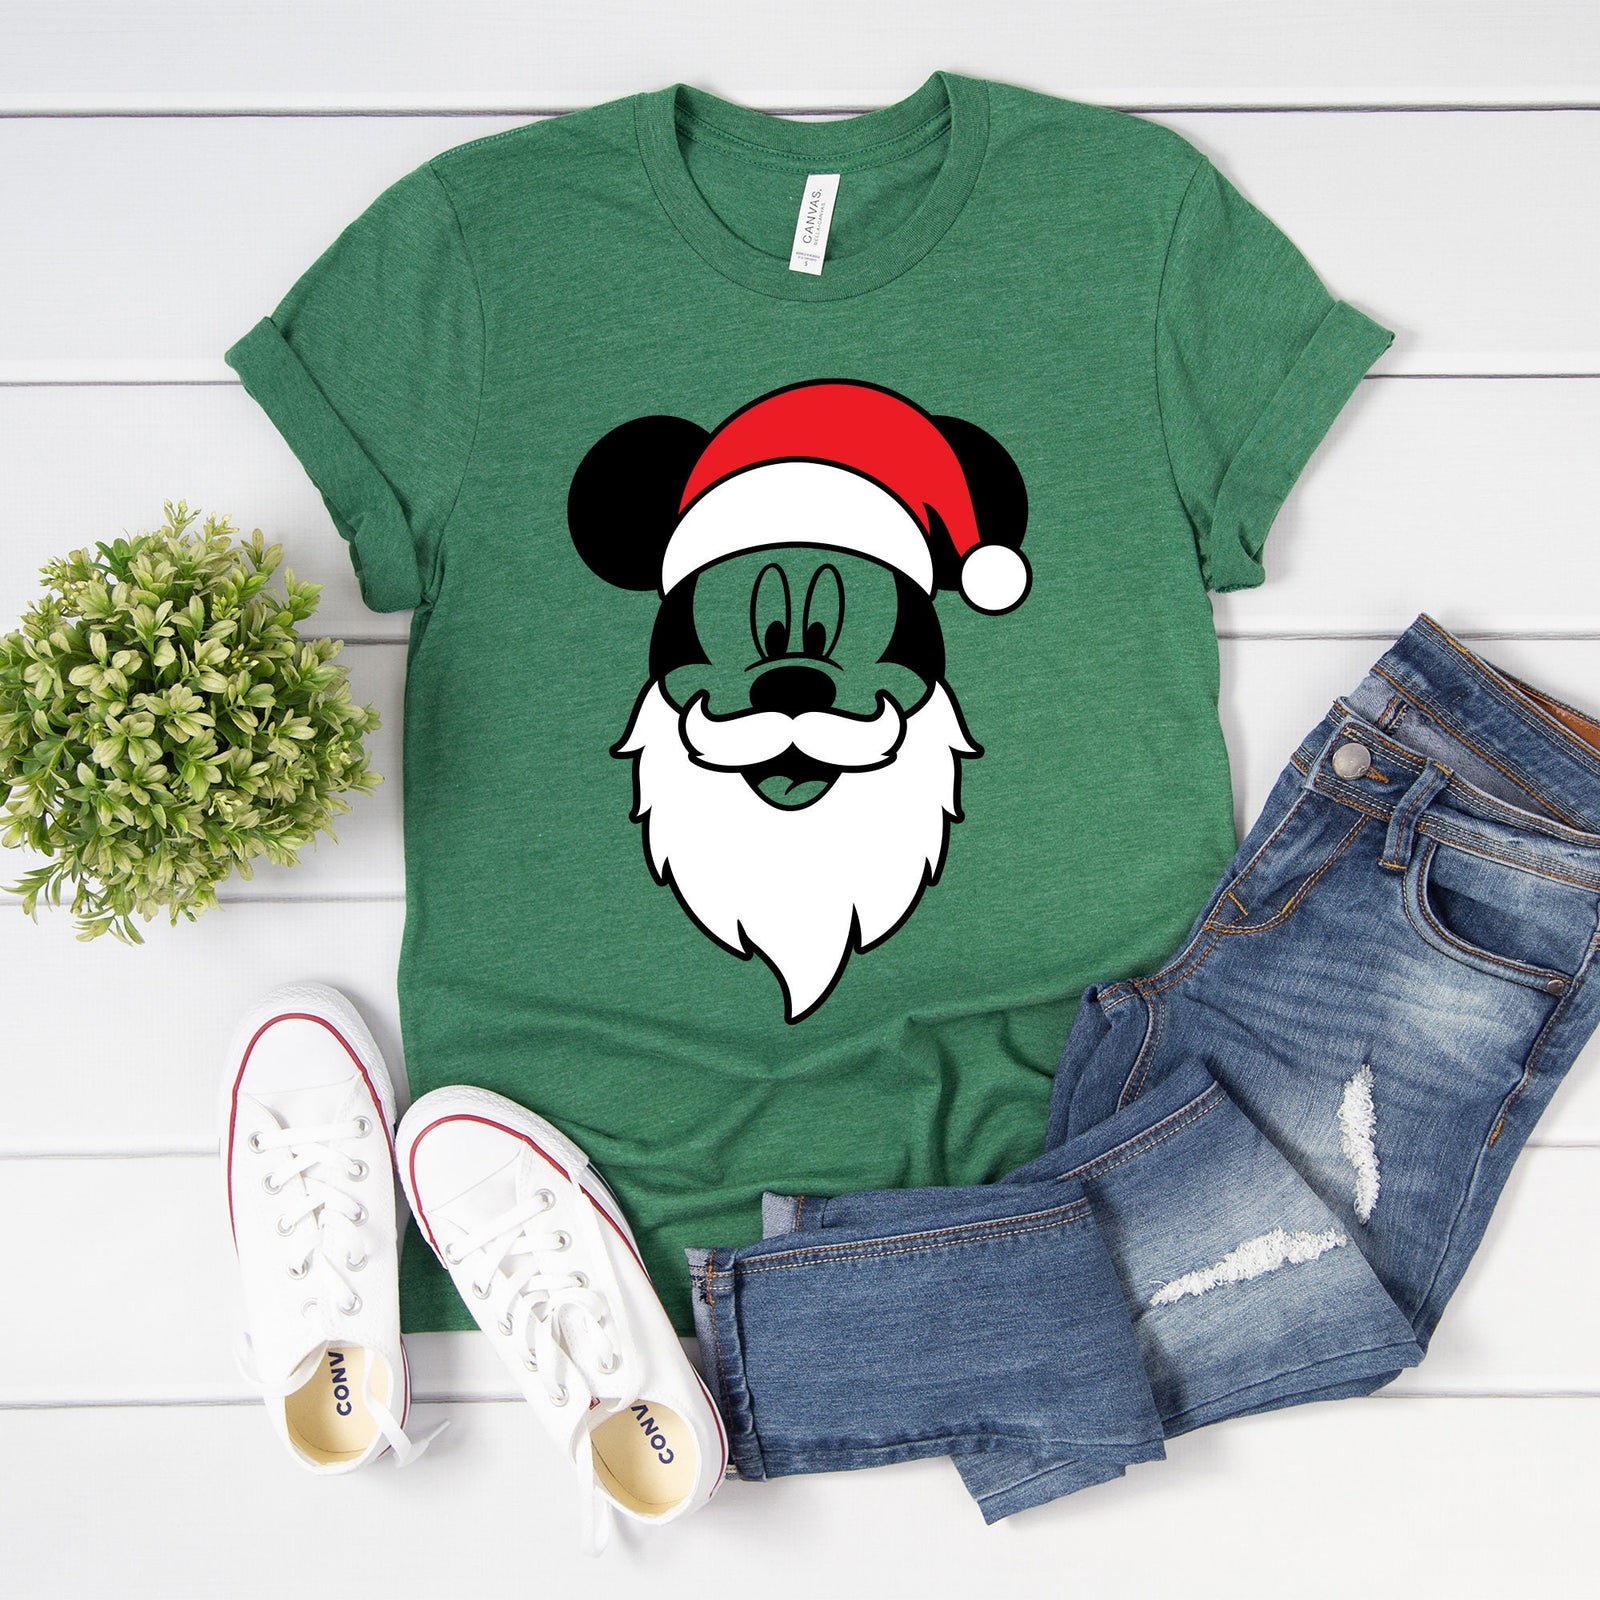 Santa Mickey Mouse Adult t shirt - Disney Trip Matching Shirts - Mickey Mouse T Shirt - Christmas Holiday